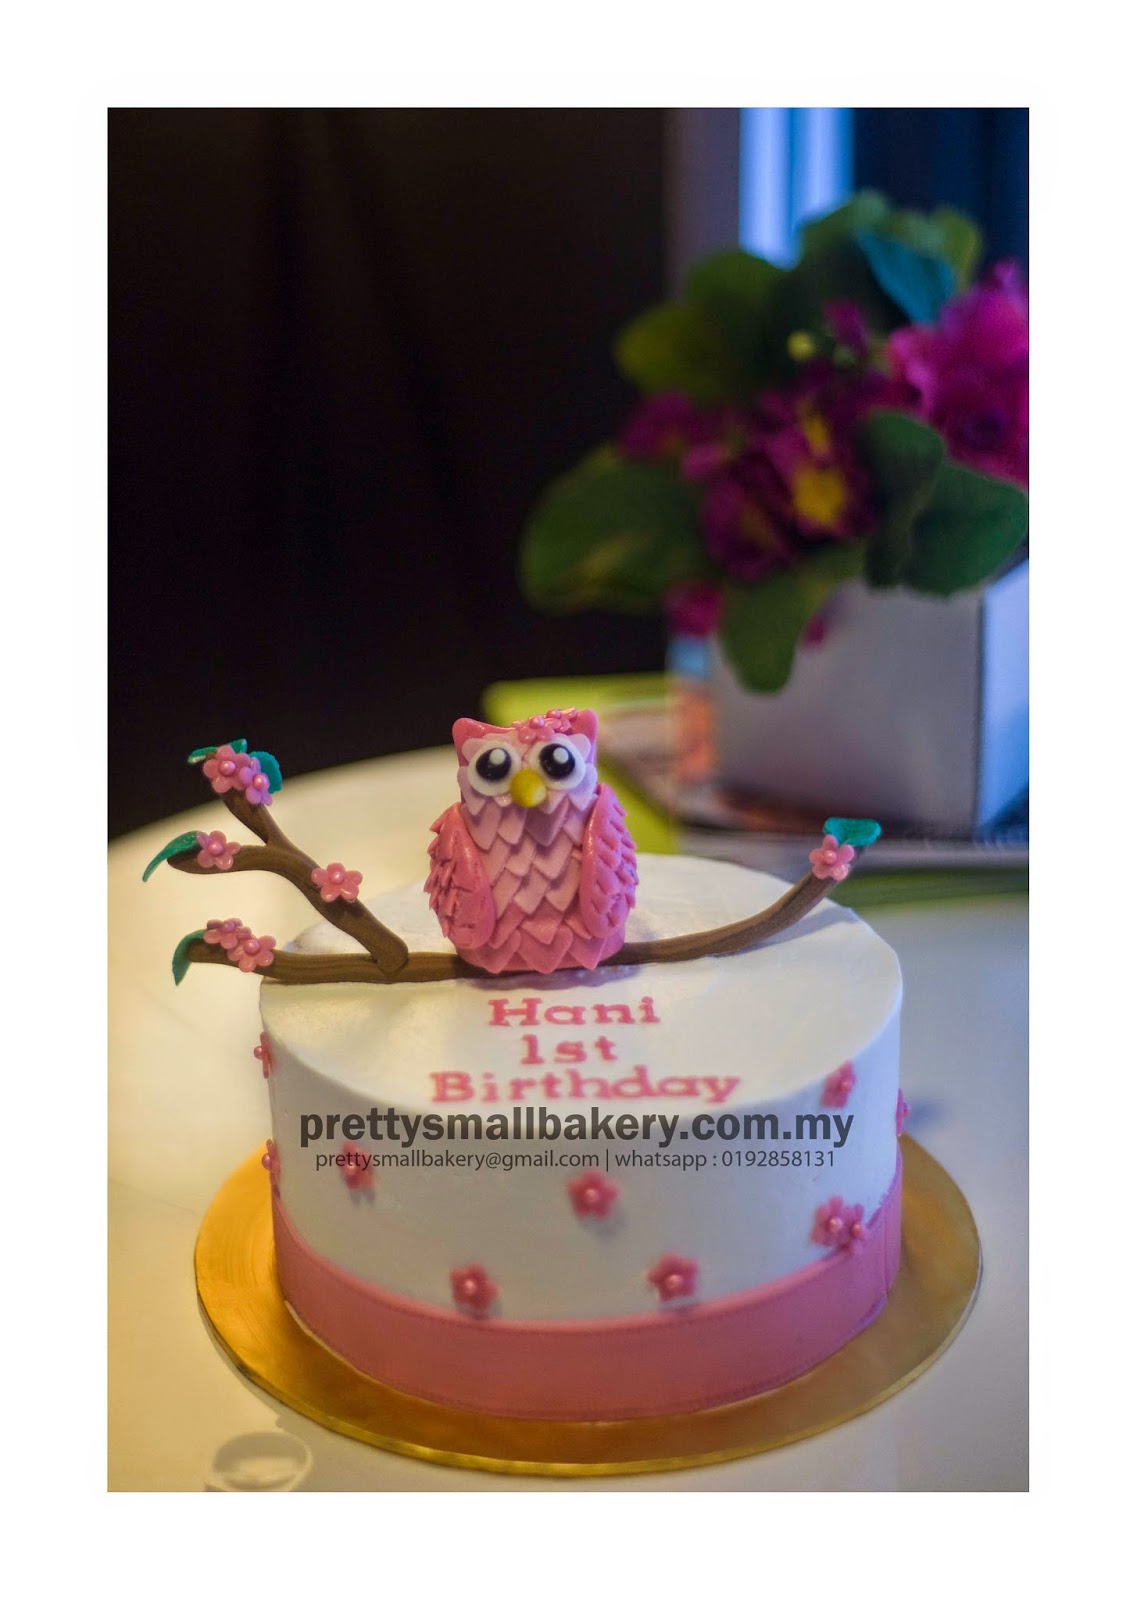 Kek birthday yang paling comel - Prettysmallbakery